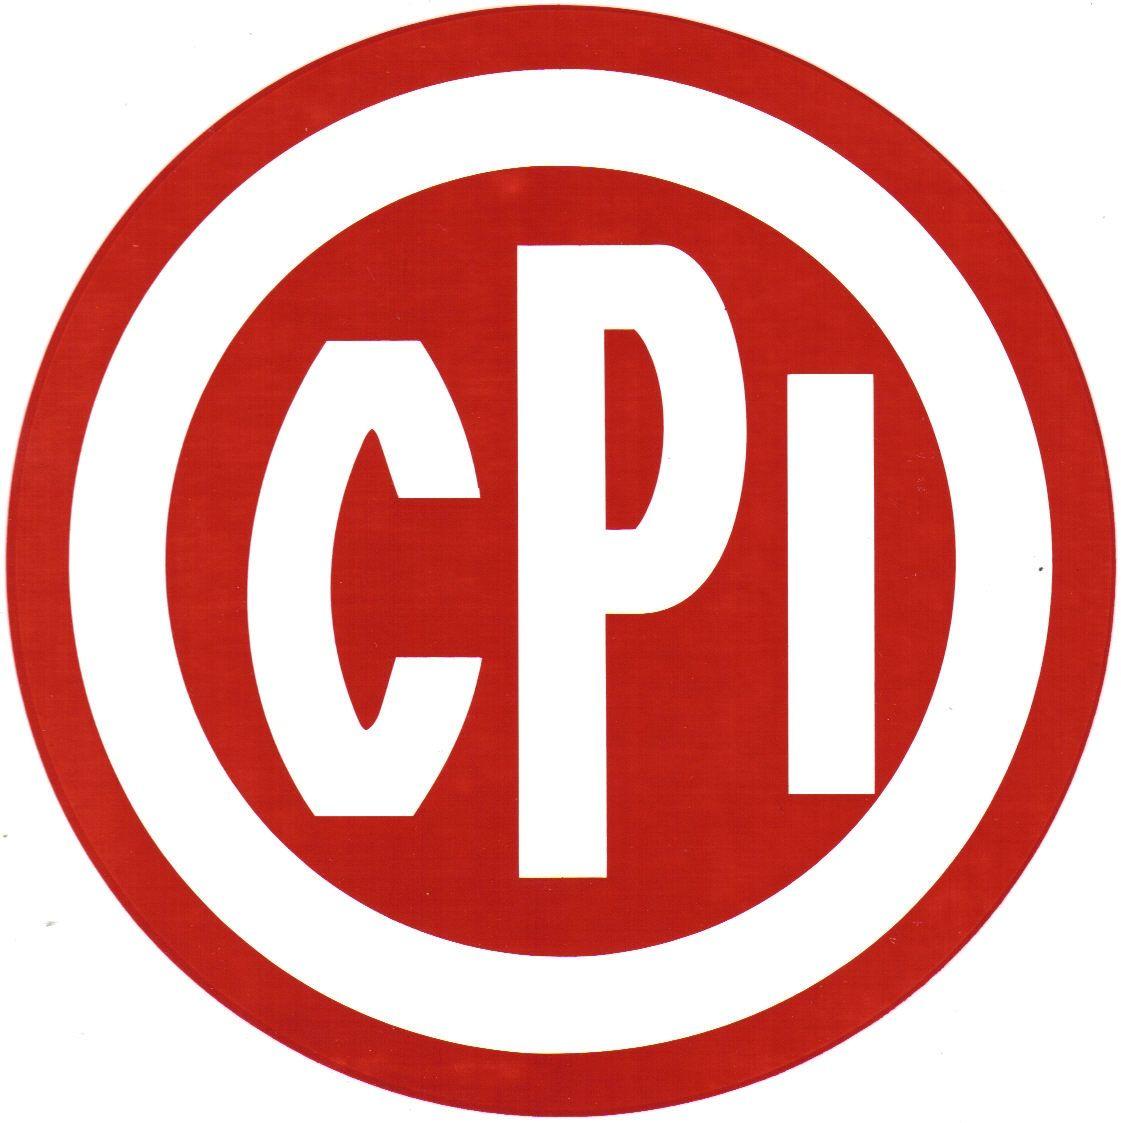 CPI Logo - LogoDix